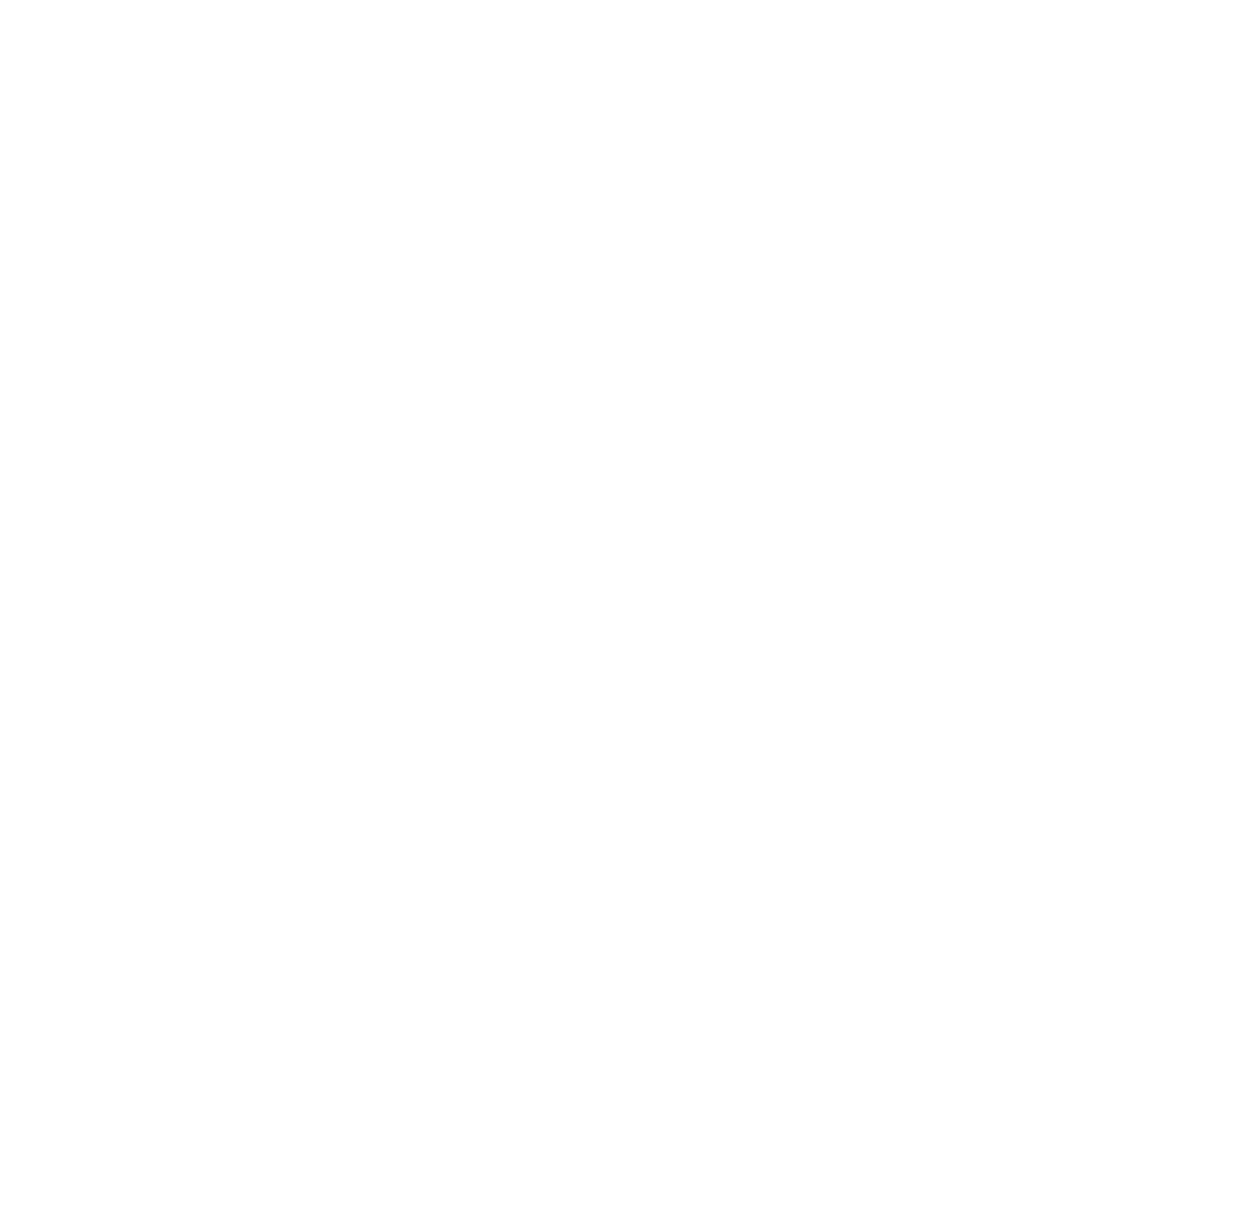 AH - Letters